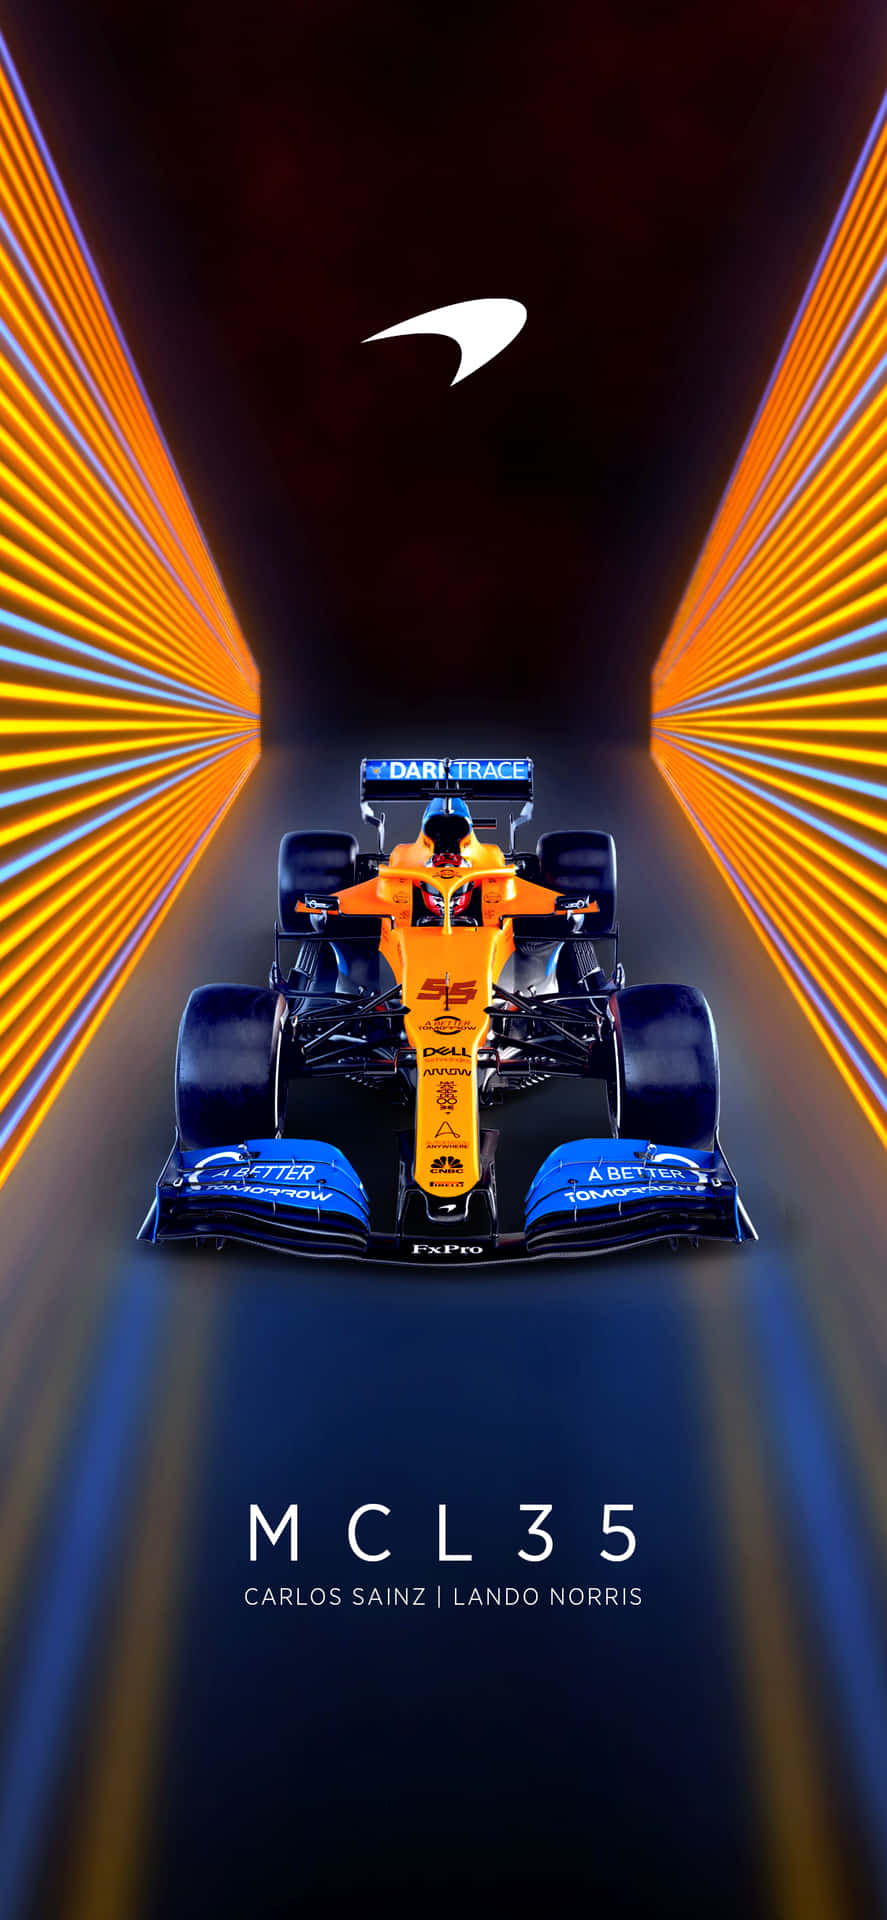 "Mclaren Formula 1 Racing Team" Wallpaper